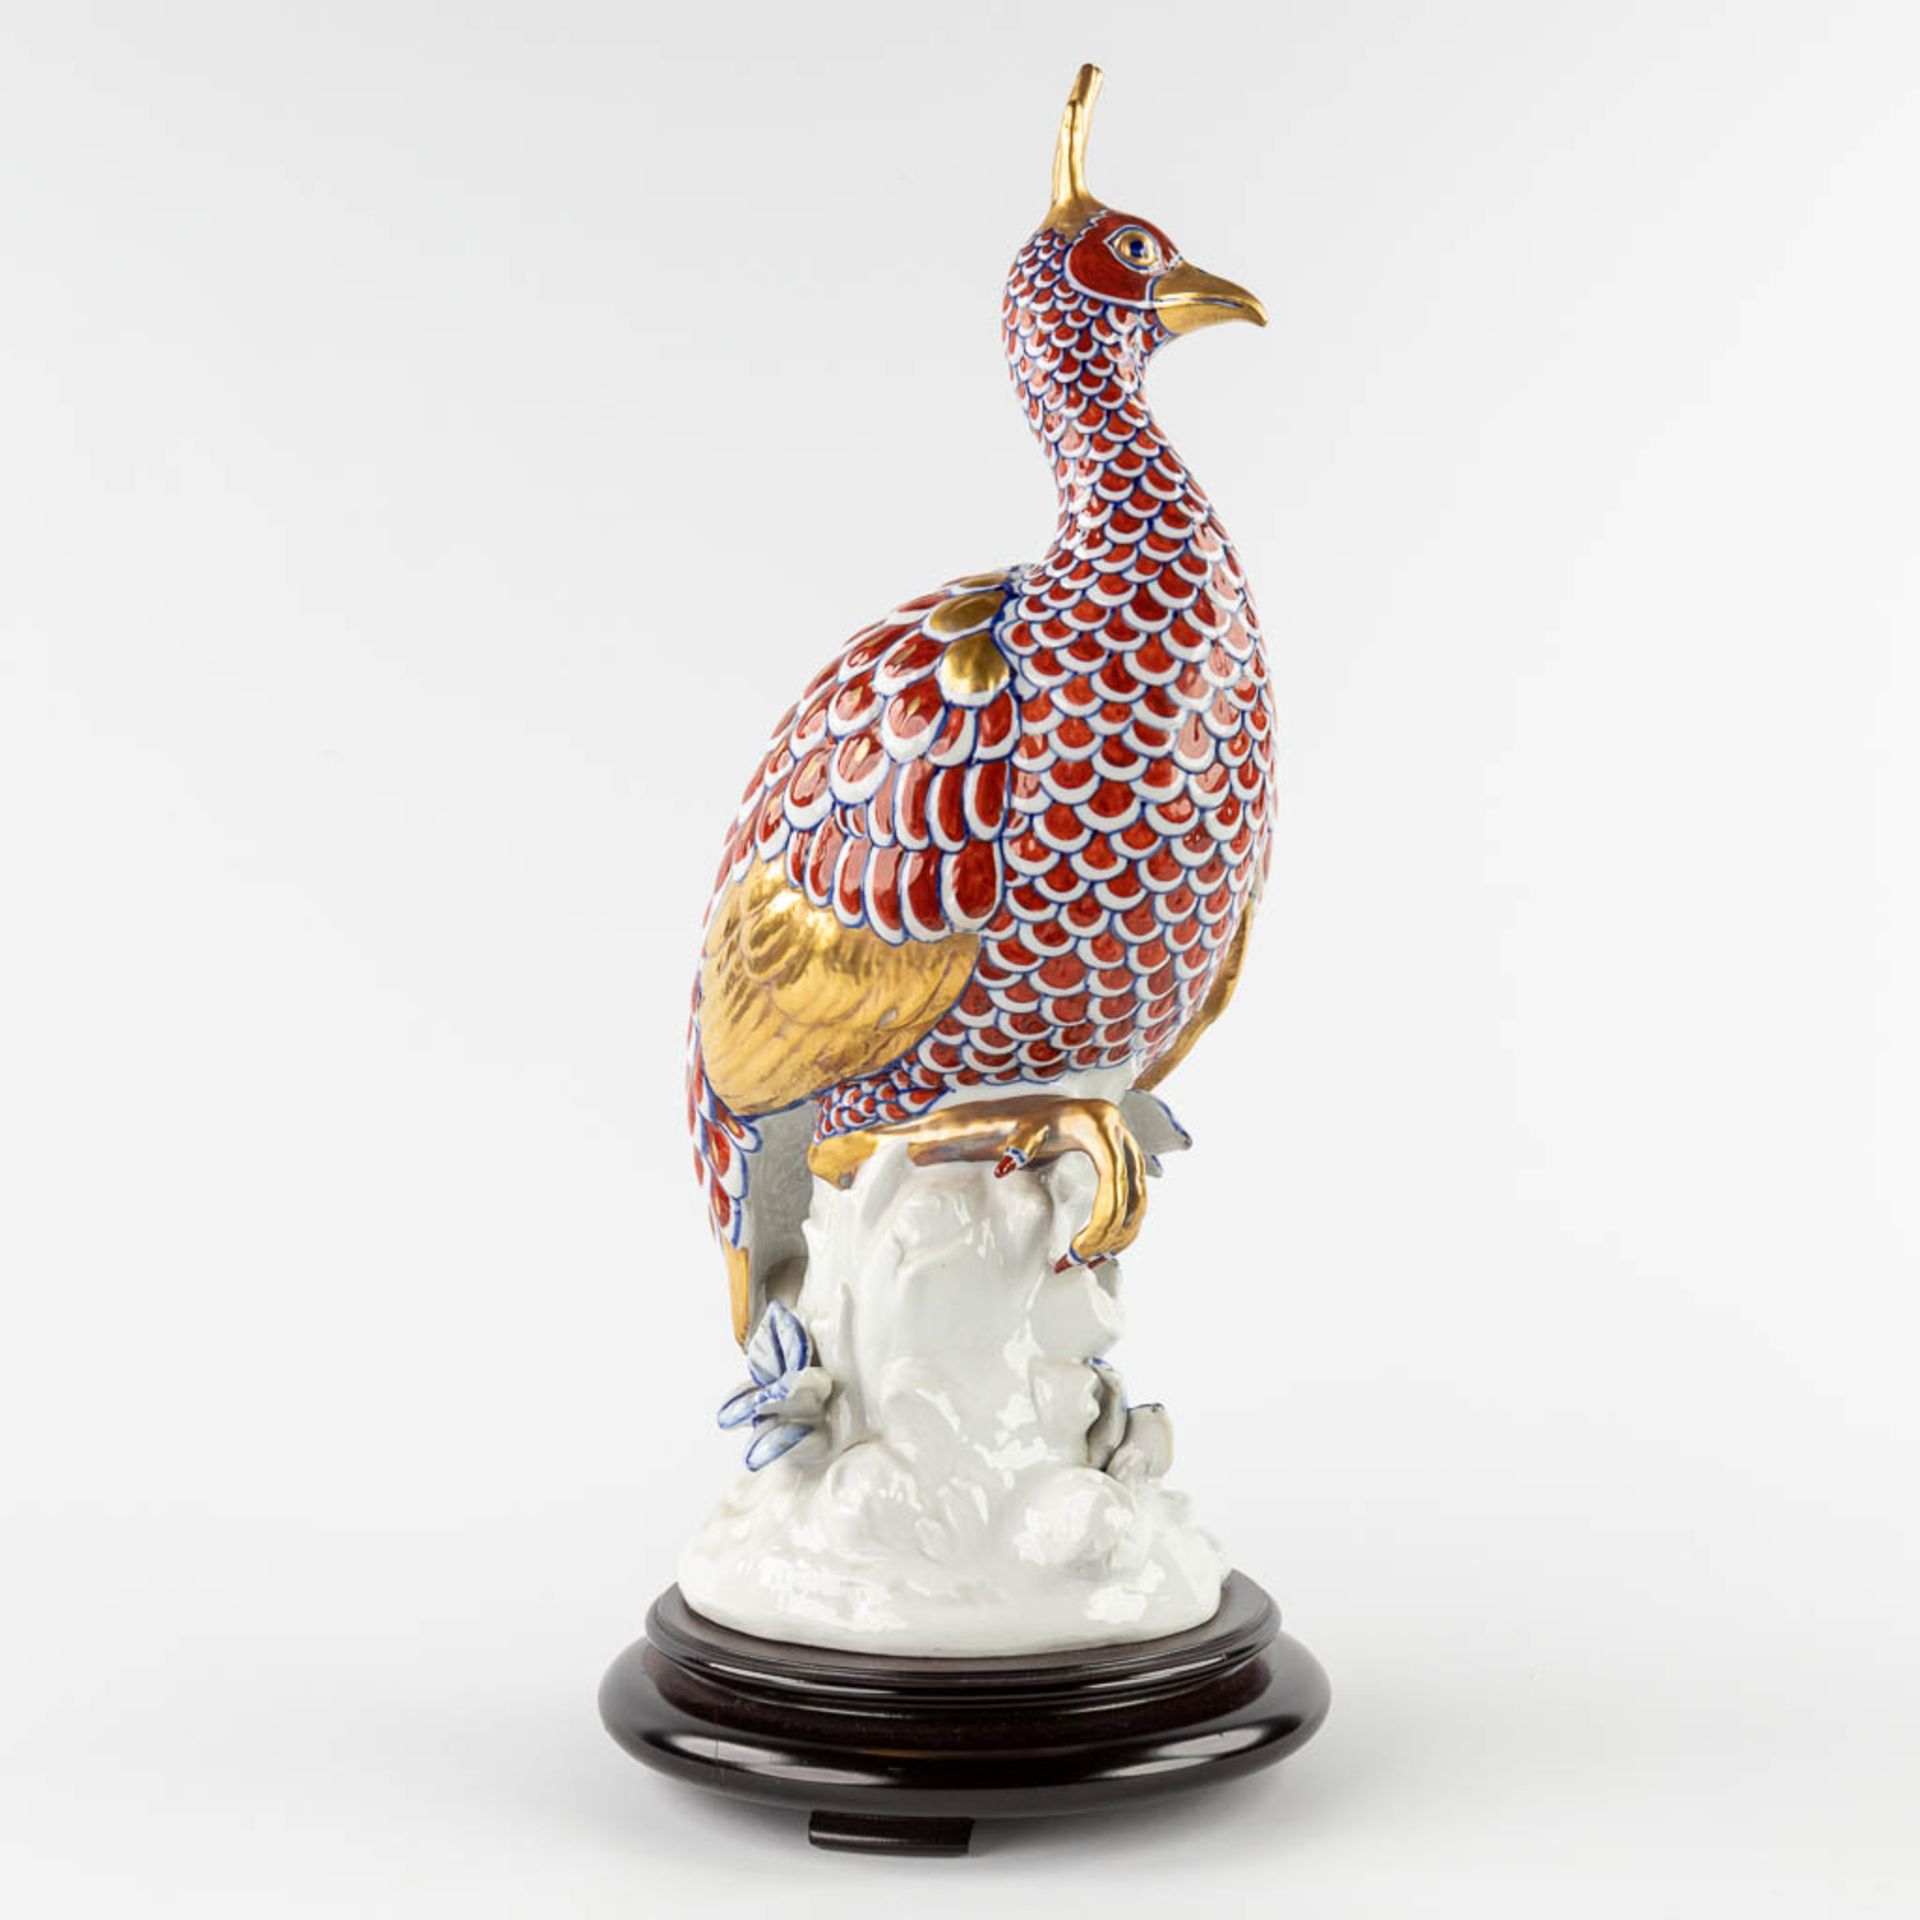 Societa Porcelane Artistice Firenze Italy, a bird, porcelain. (H:51 x D:22 cm) - Image 6 of 13